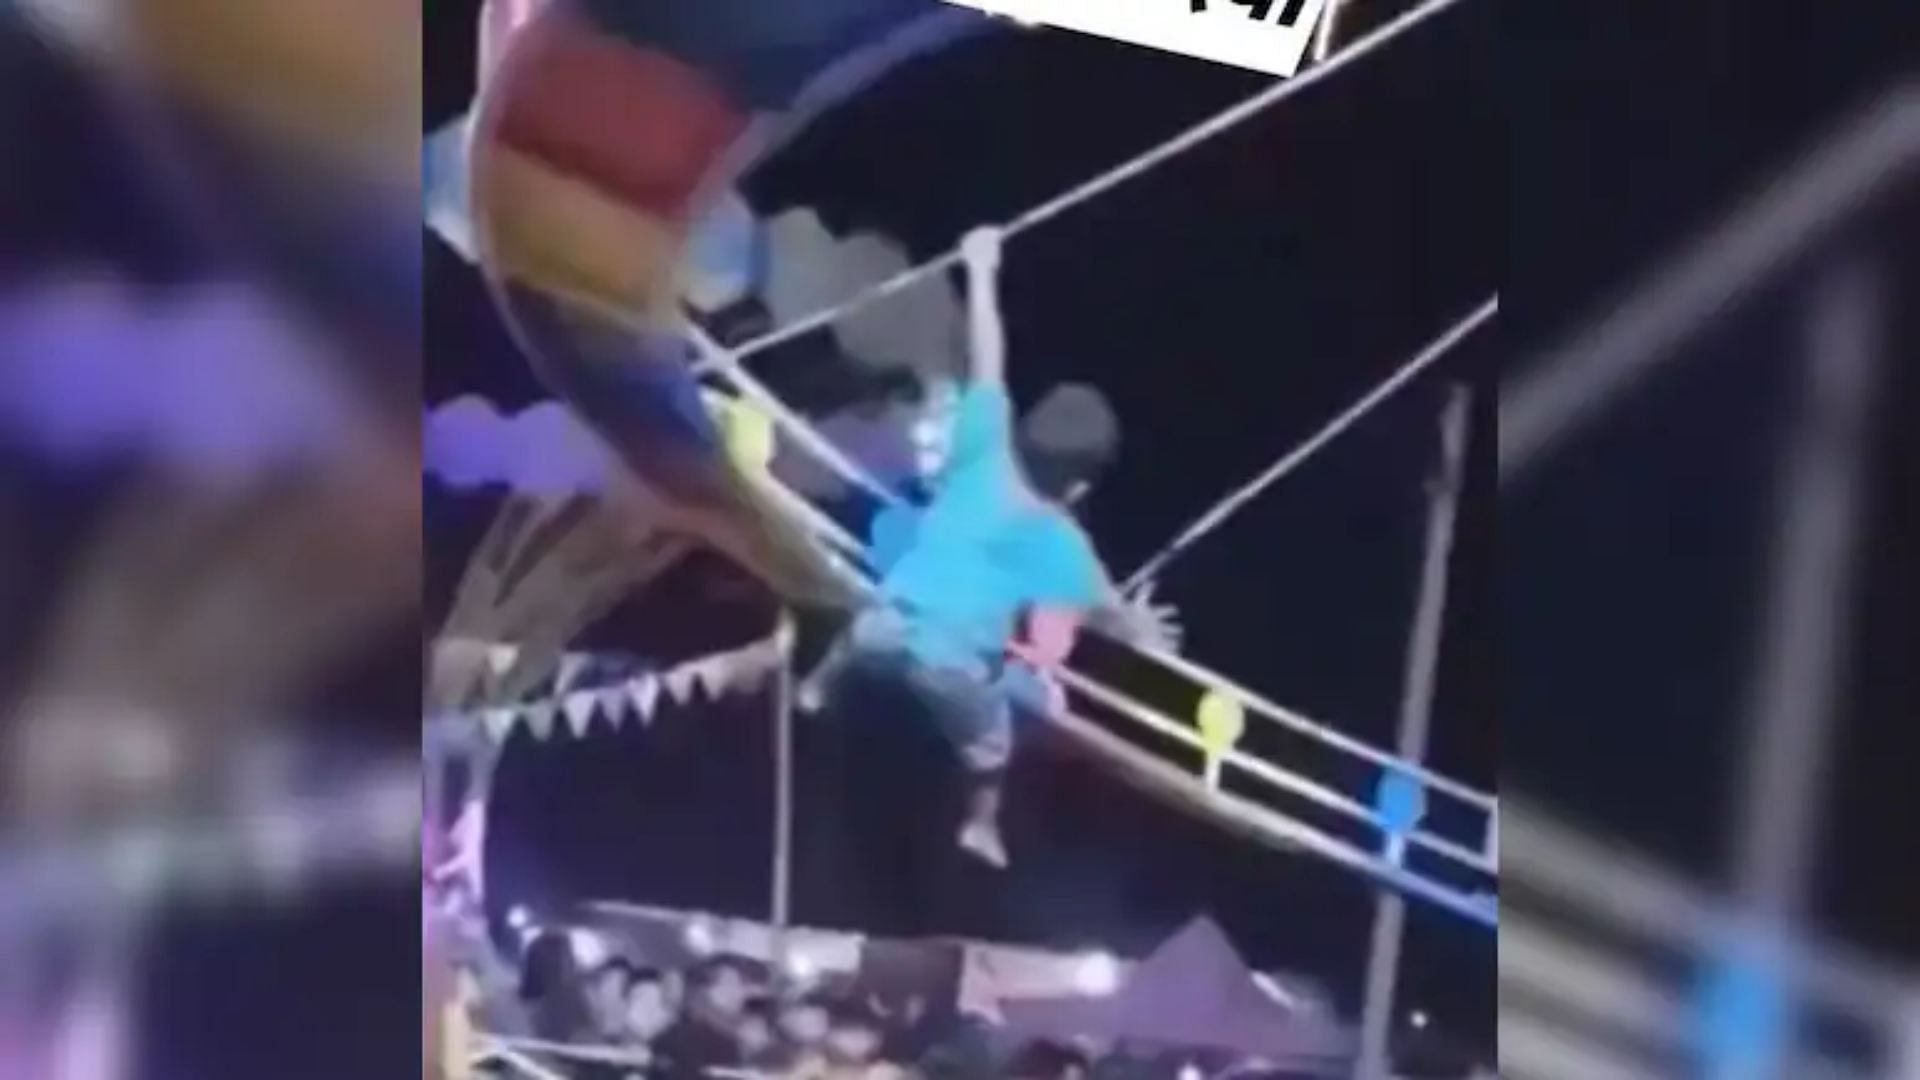 Kid performs dangerous stunts on swing in fair video went viral on social media